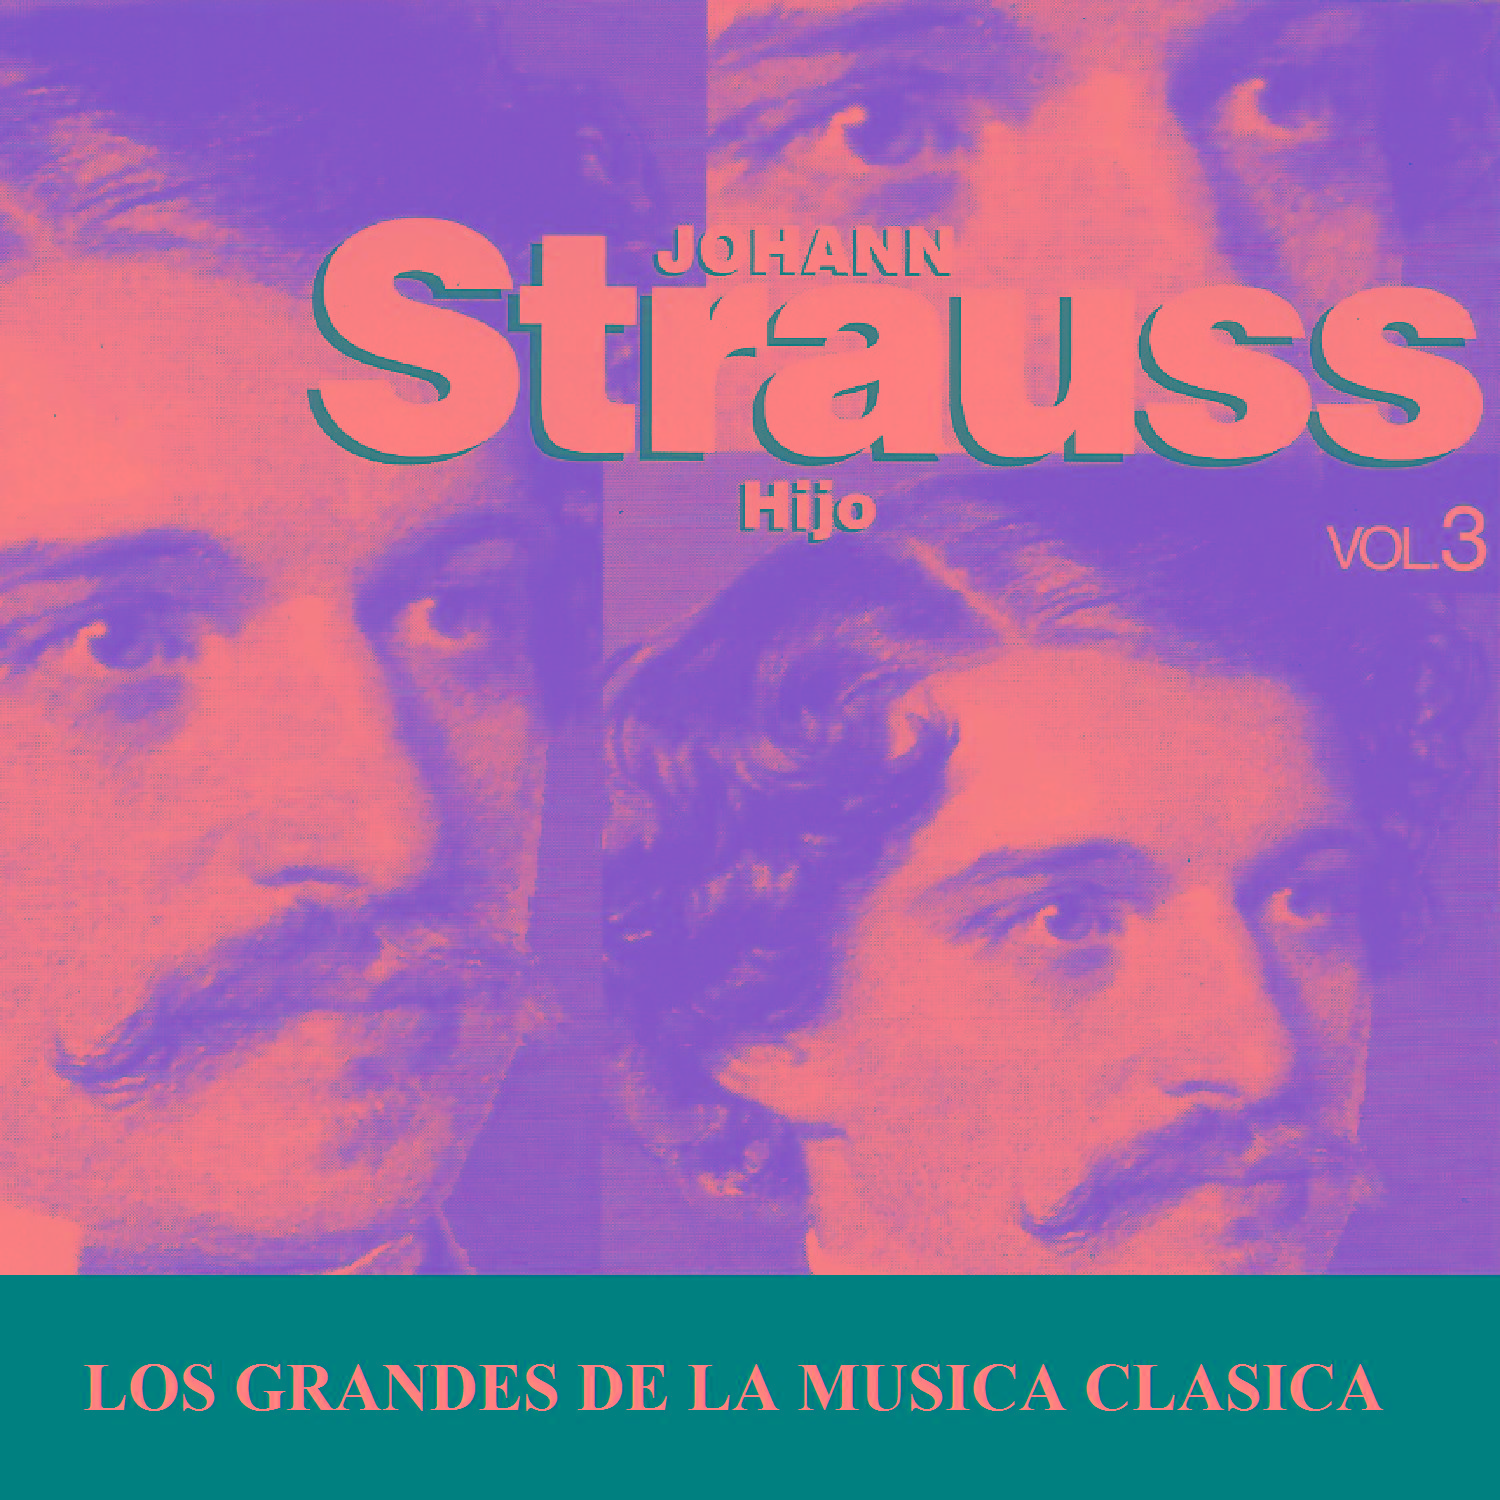 Los Grandes de la Musica Clasica - Johann Strauss Vol. 3